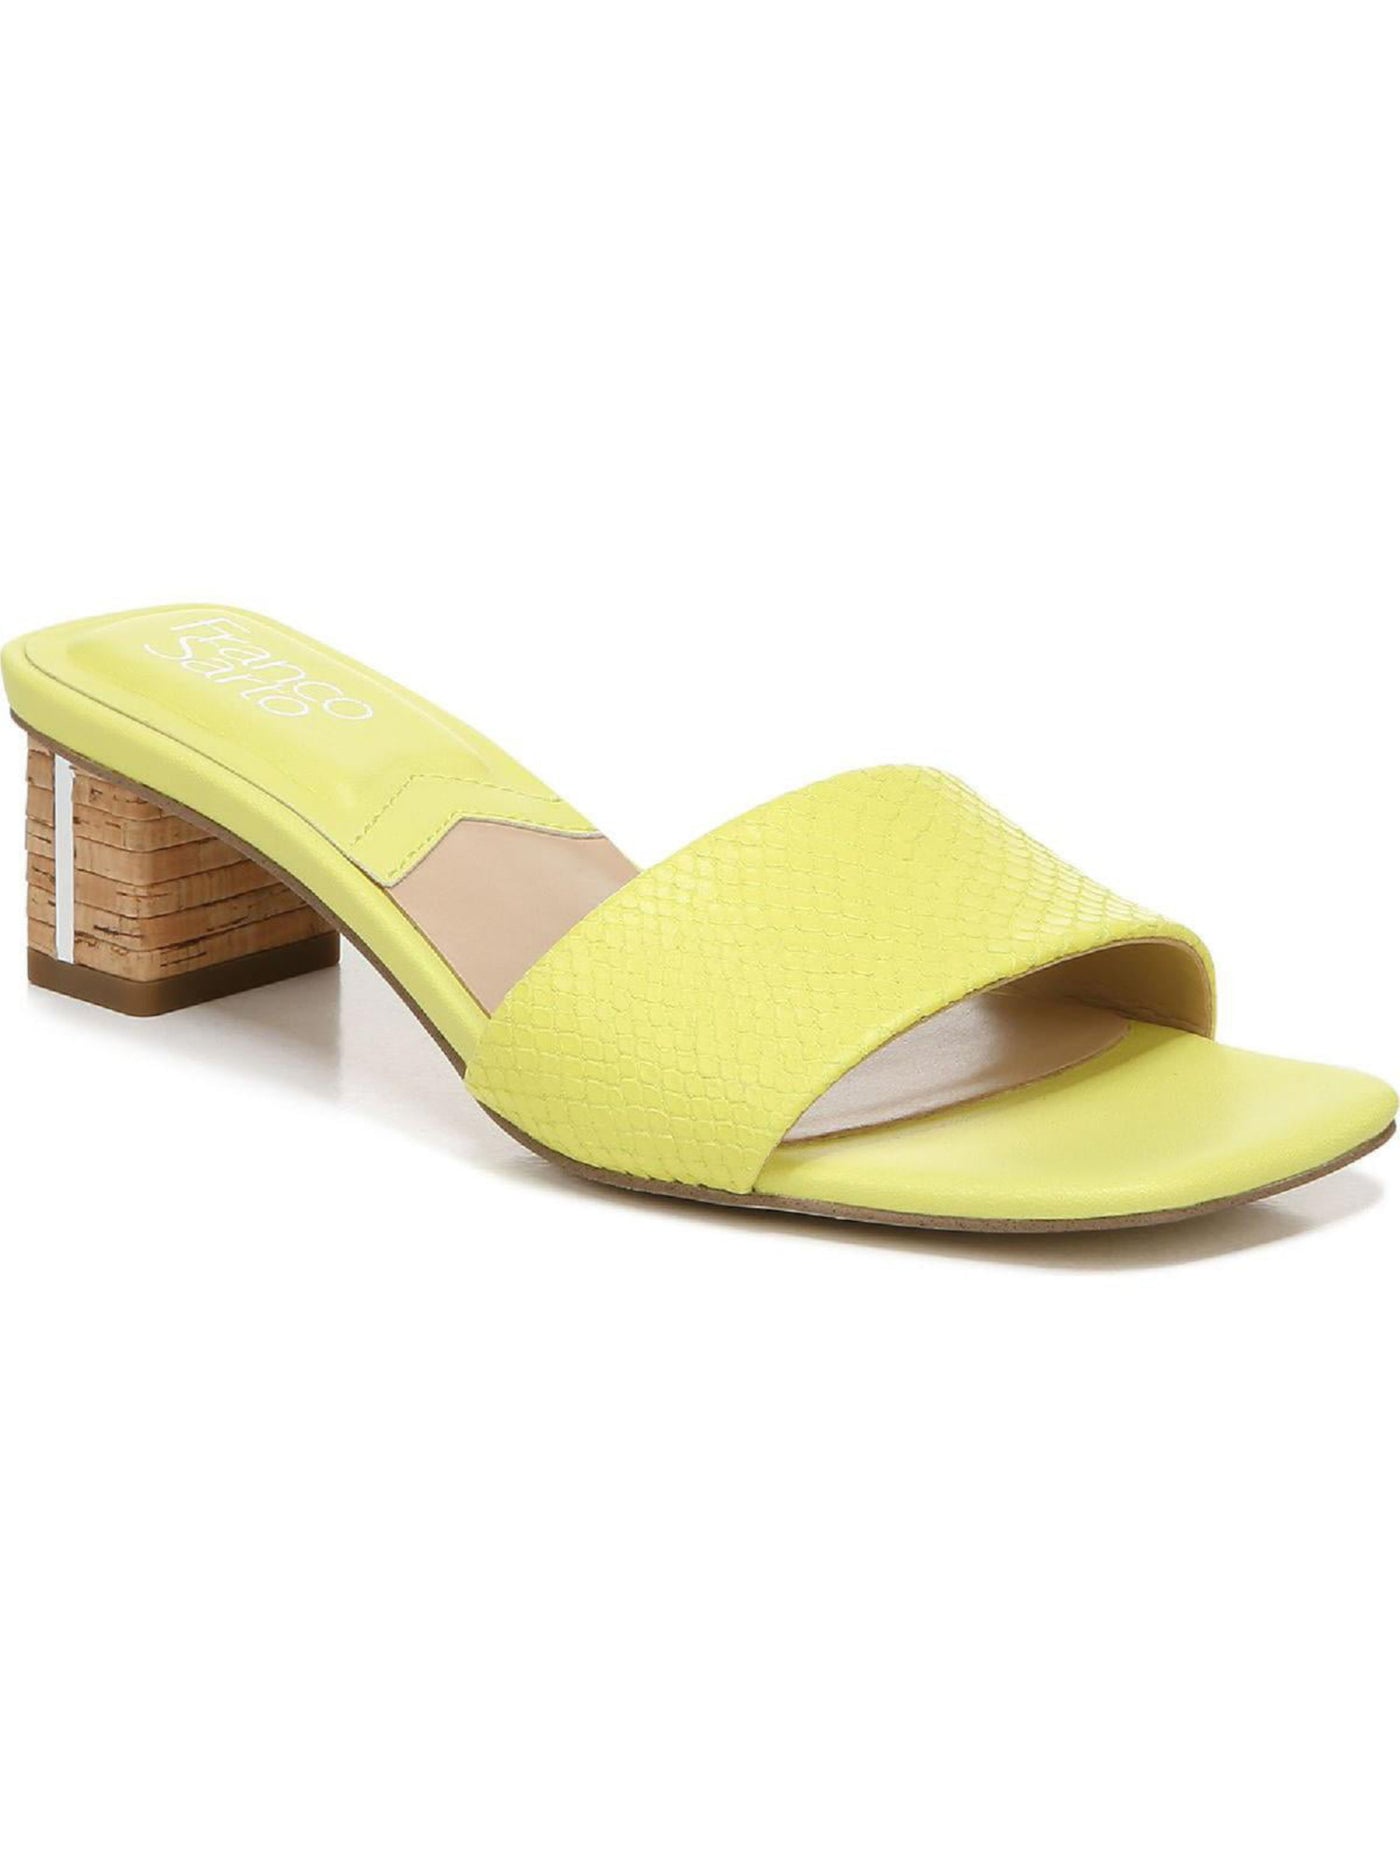 FRANCO SARTO Womens Yellow Cruella Open Toe Block Heel Slip On Leather Dress Heeled Sandal 6.5 M